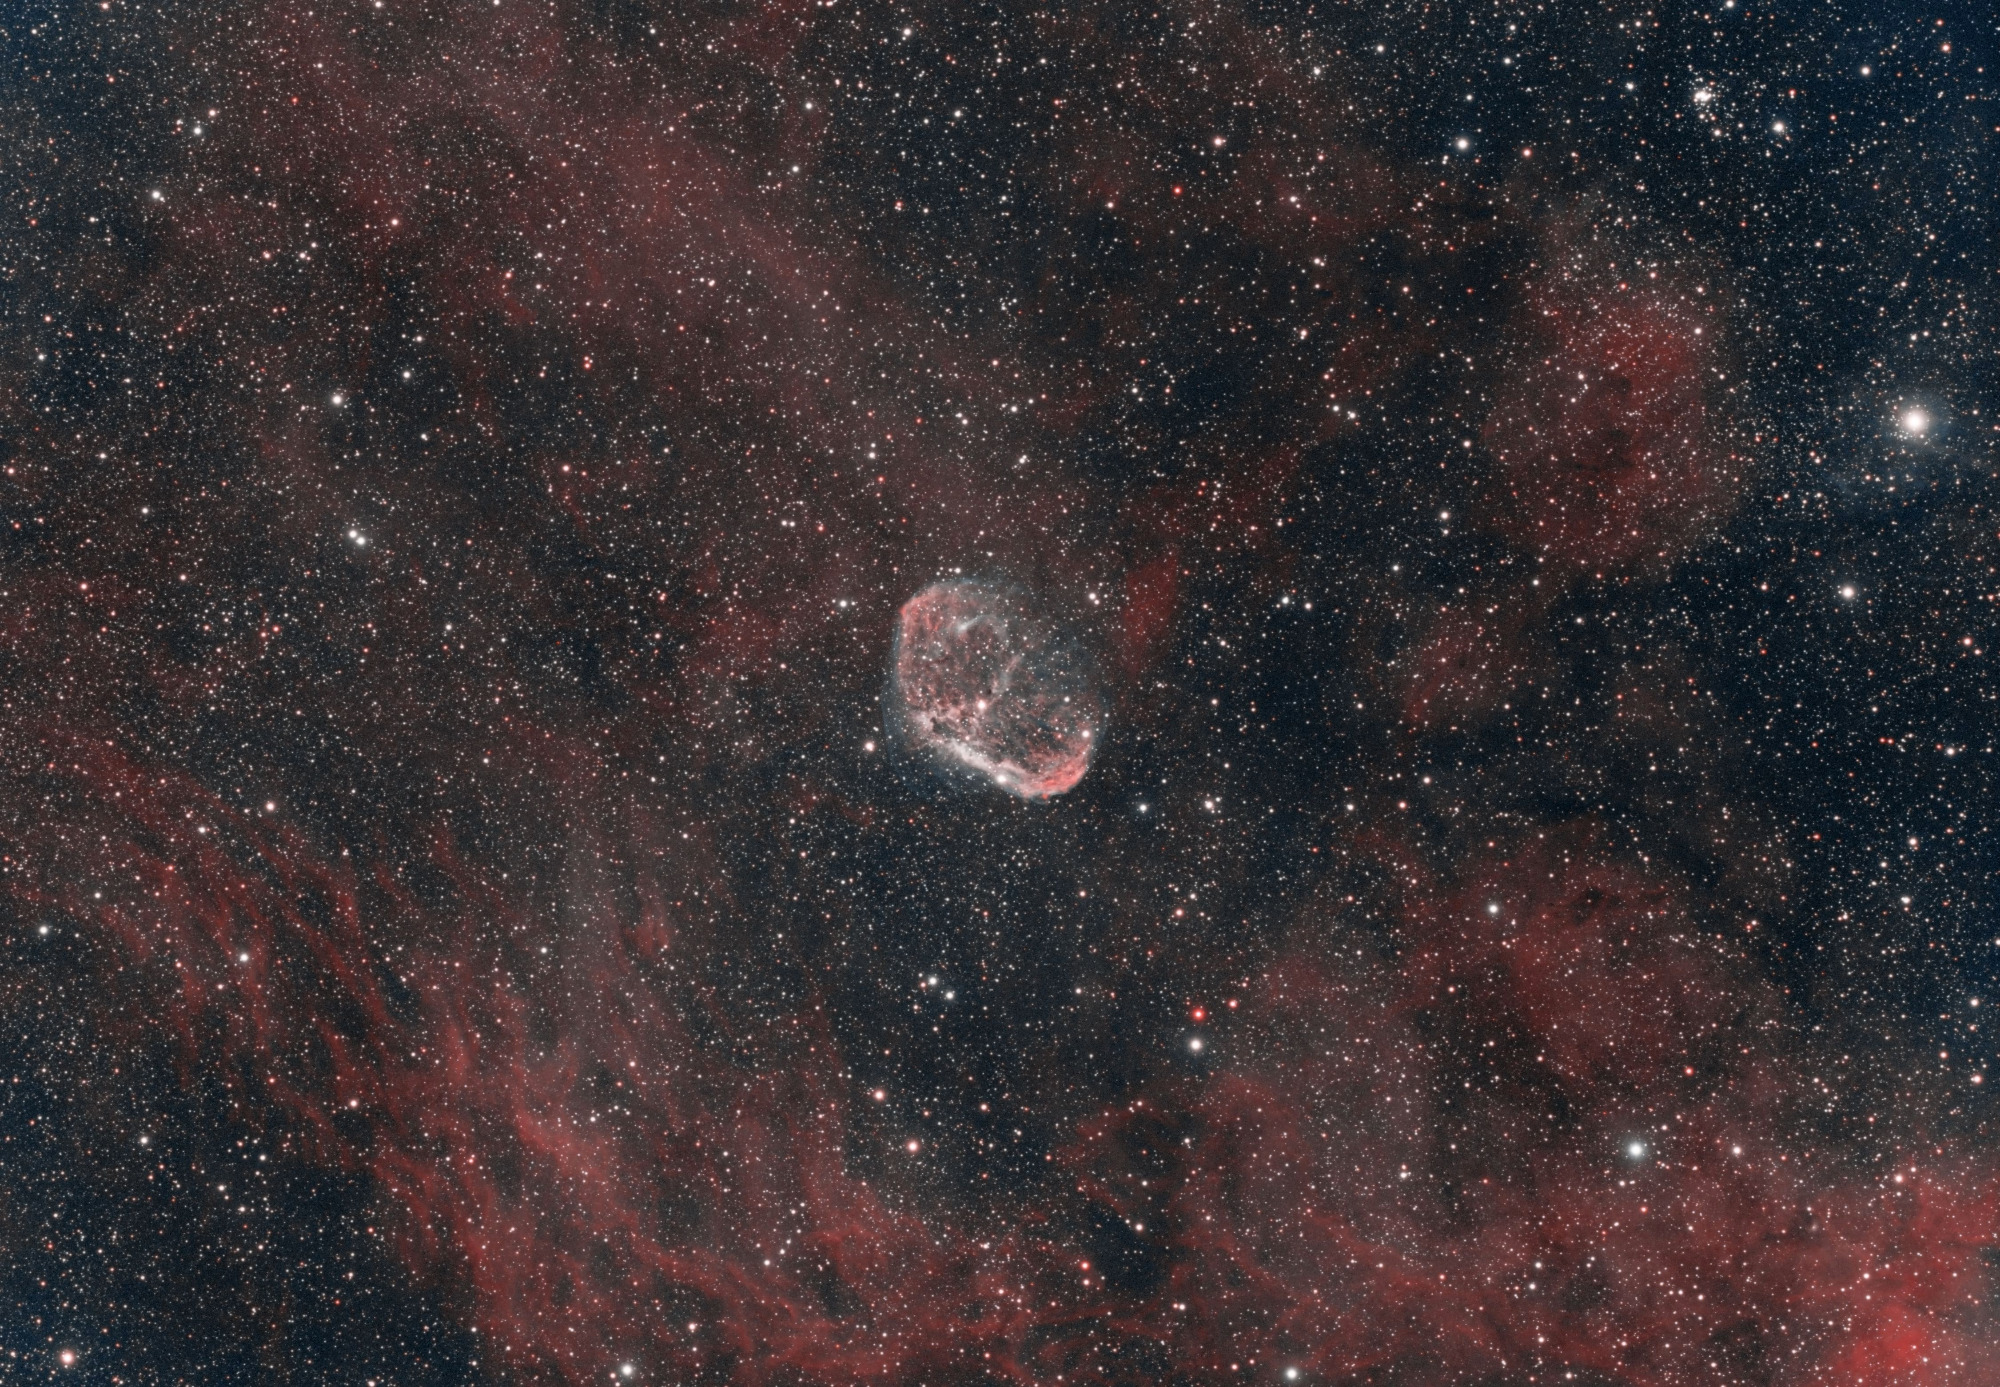 2019-09-05_NGC6888_HaOIII-mod-cbg-St-ct-mt-scnr-tvgd.jpg